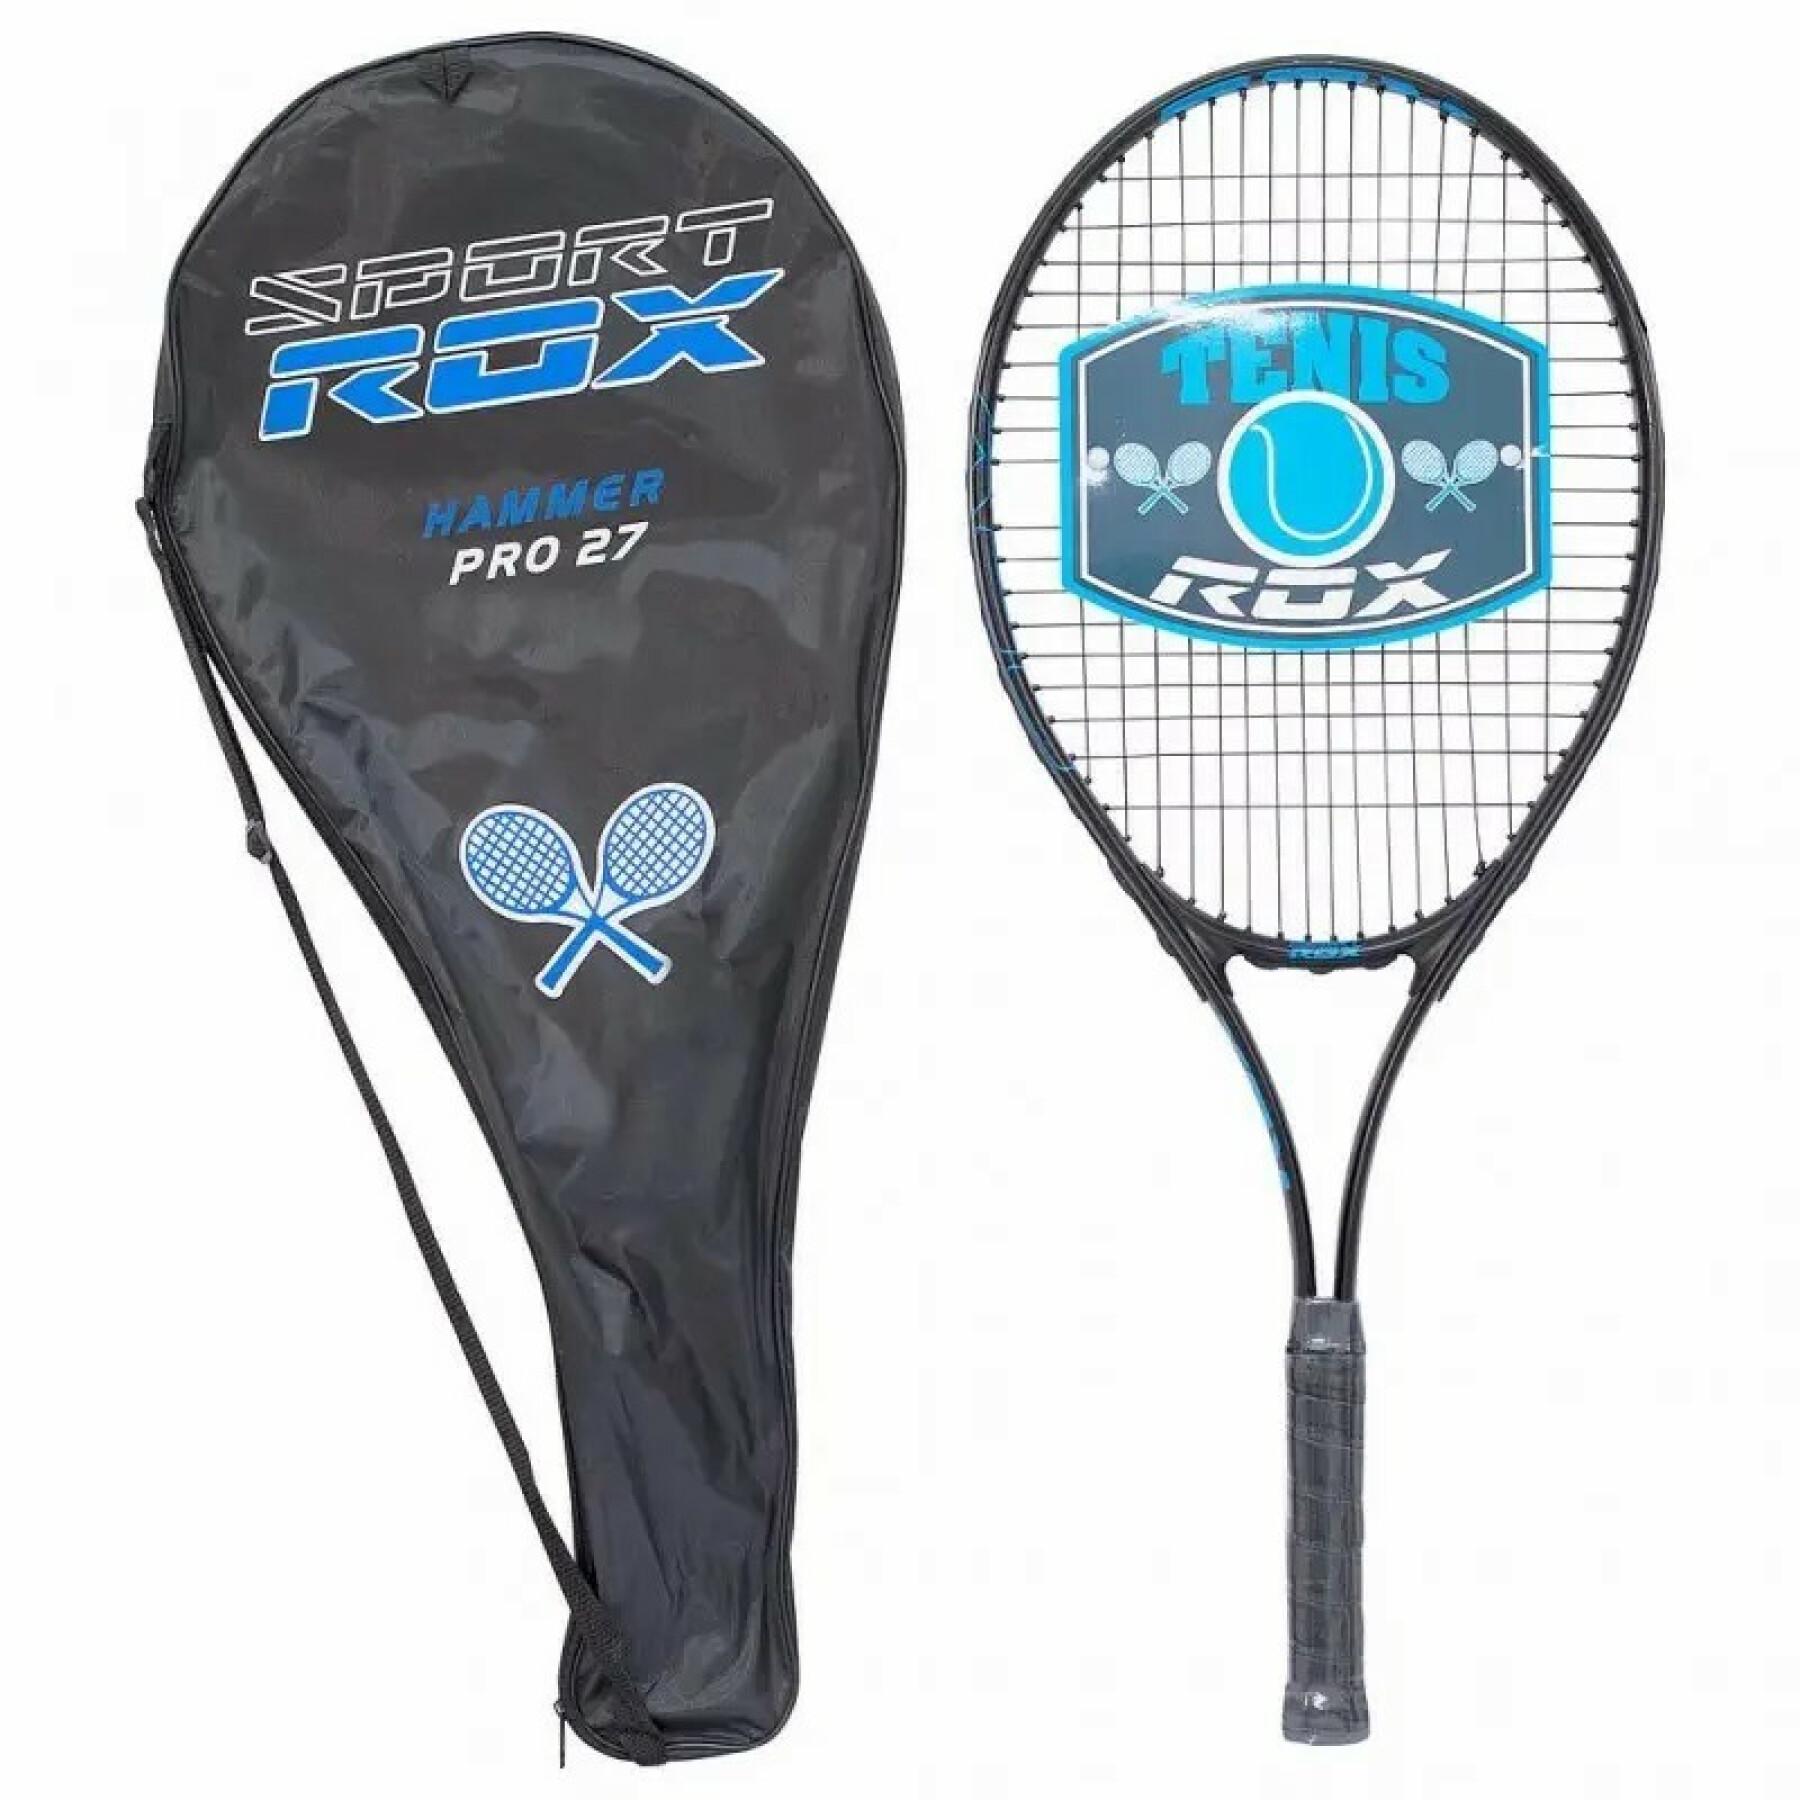 Tennis racket Softee Rox Hammer Pro 27